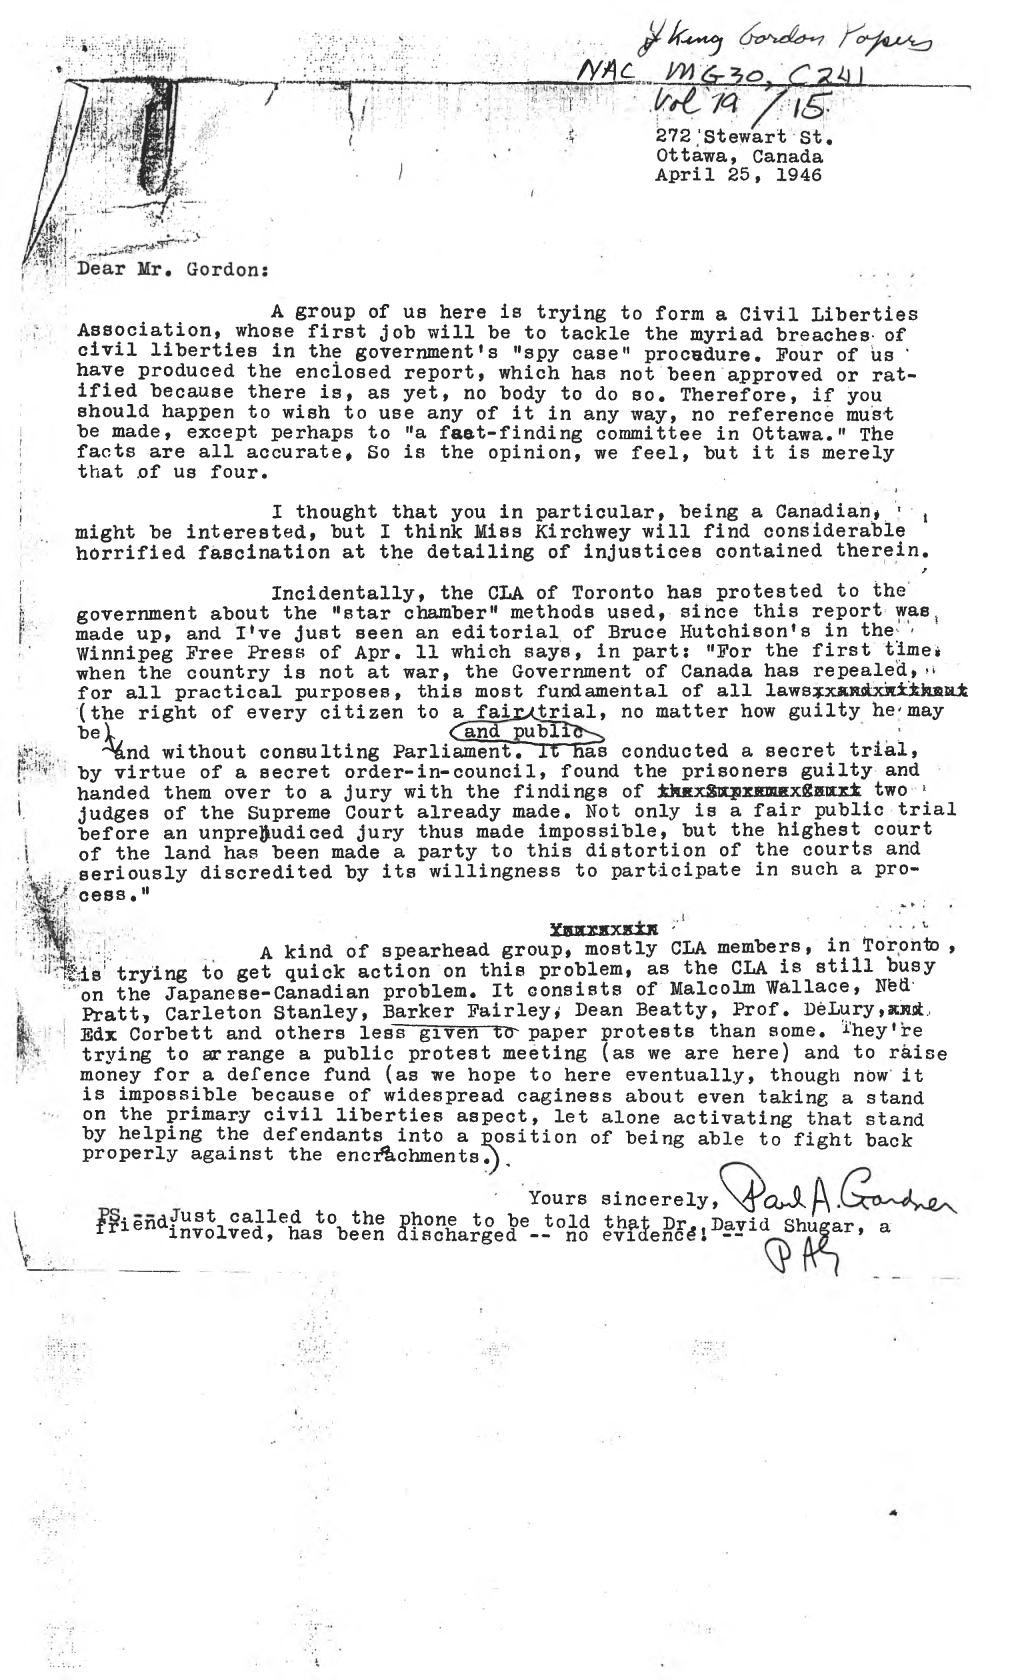 25 April 1946, Civil Liberties Association of Toronto Report on the